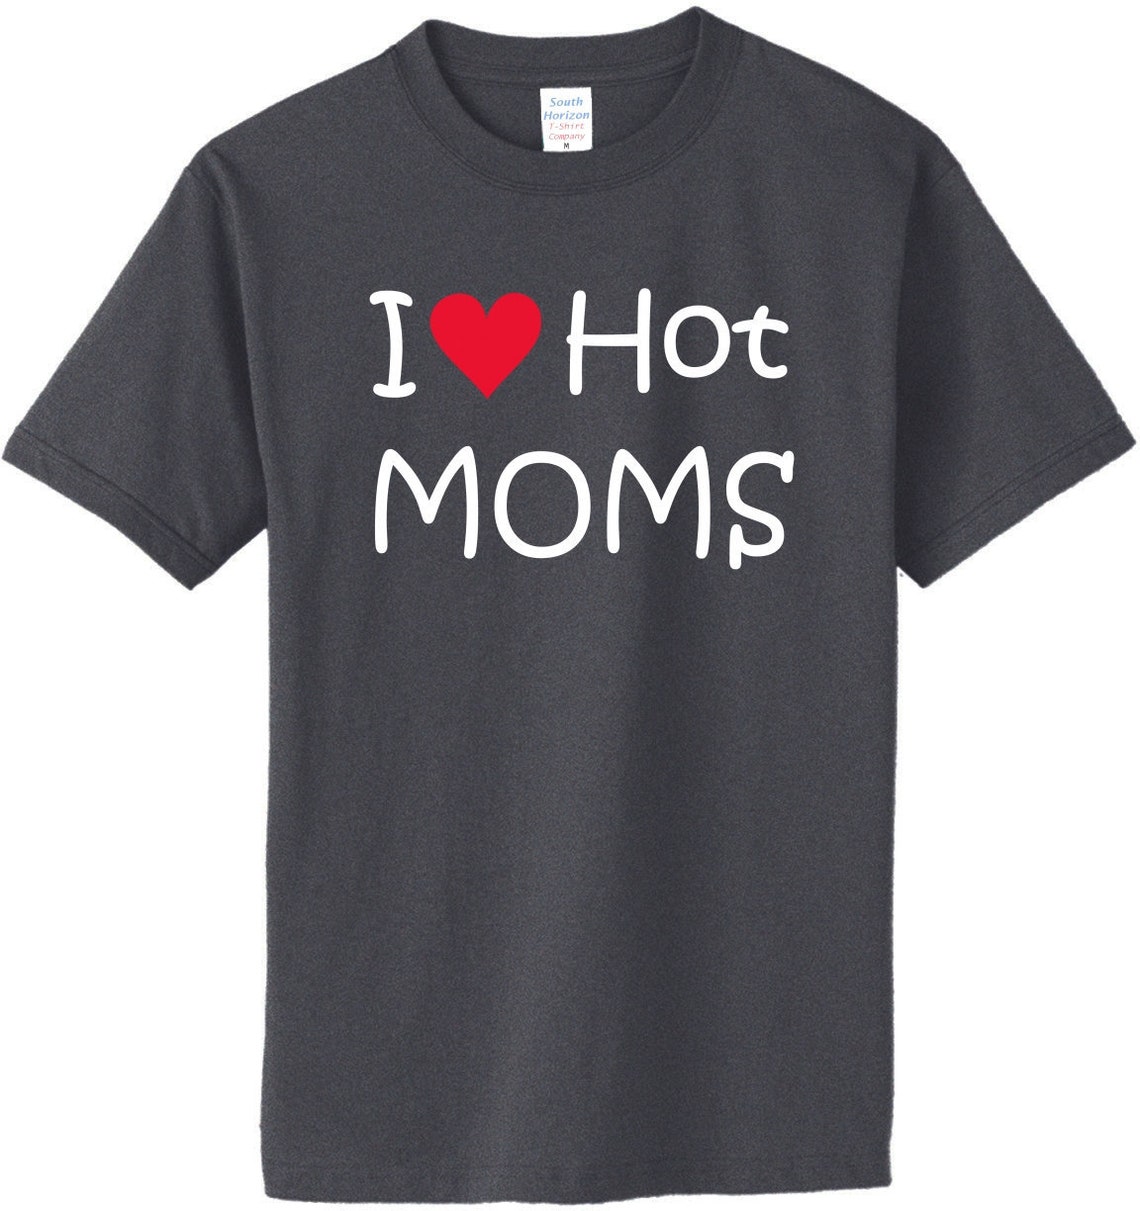 I Love Hot Moms Tshirt, I Love Hot Moms Shirt